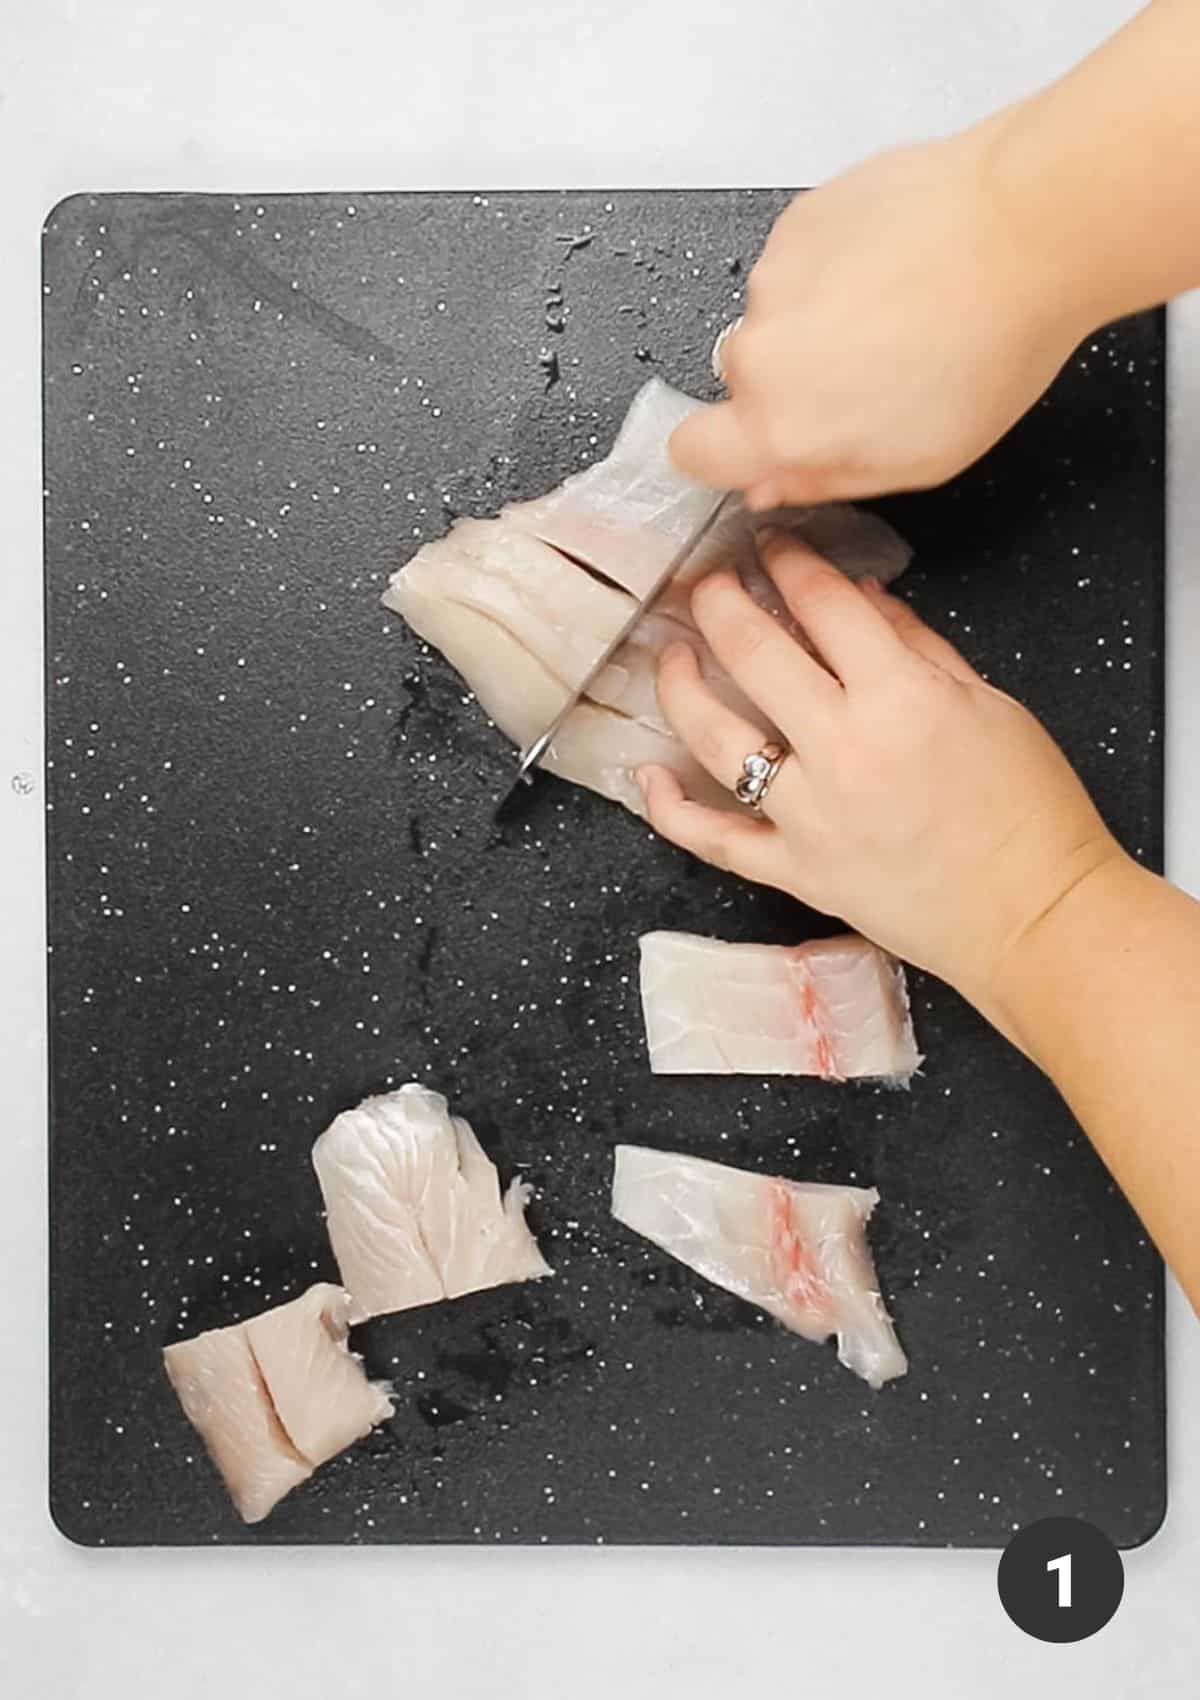 Hands cutting barramundi into small squares on a black cutting board.